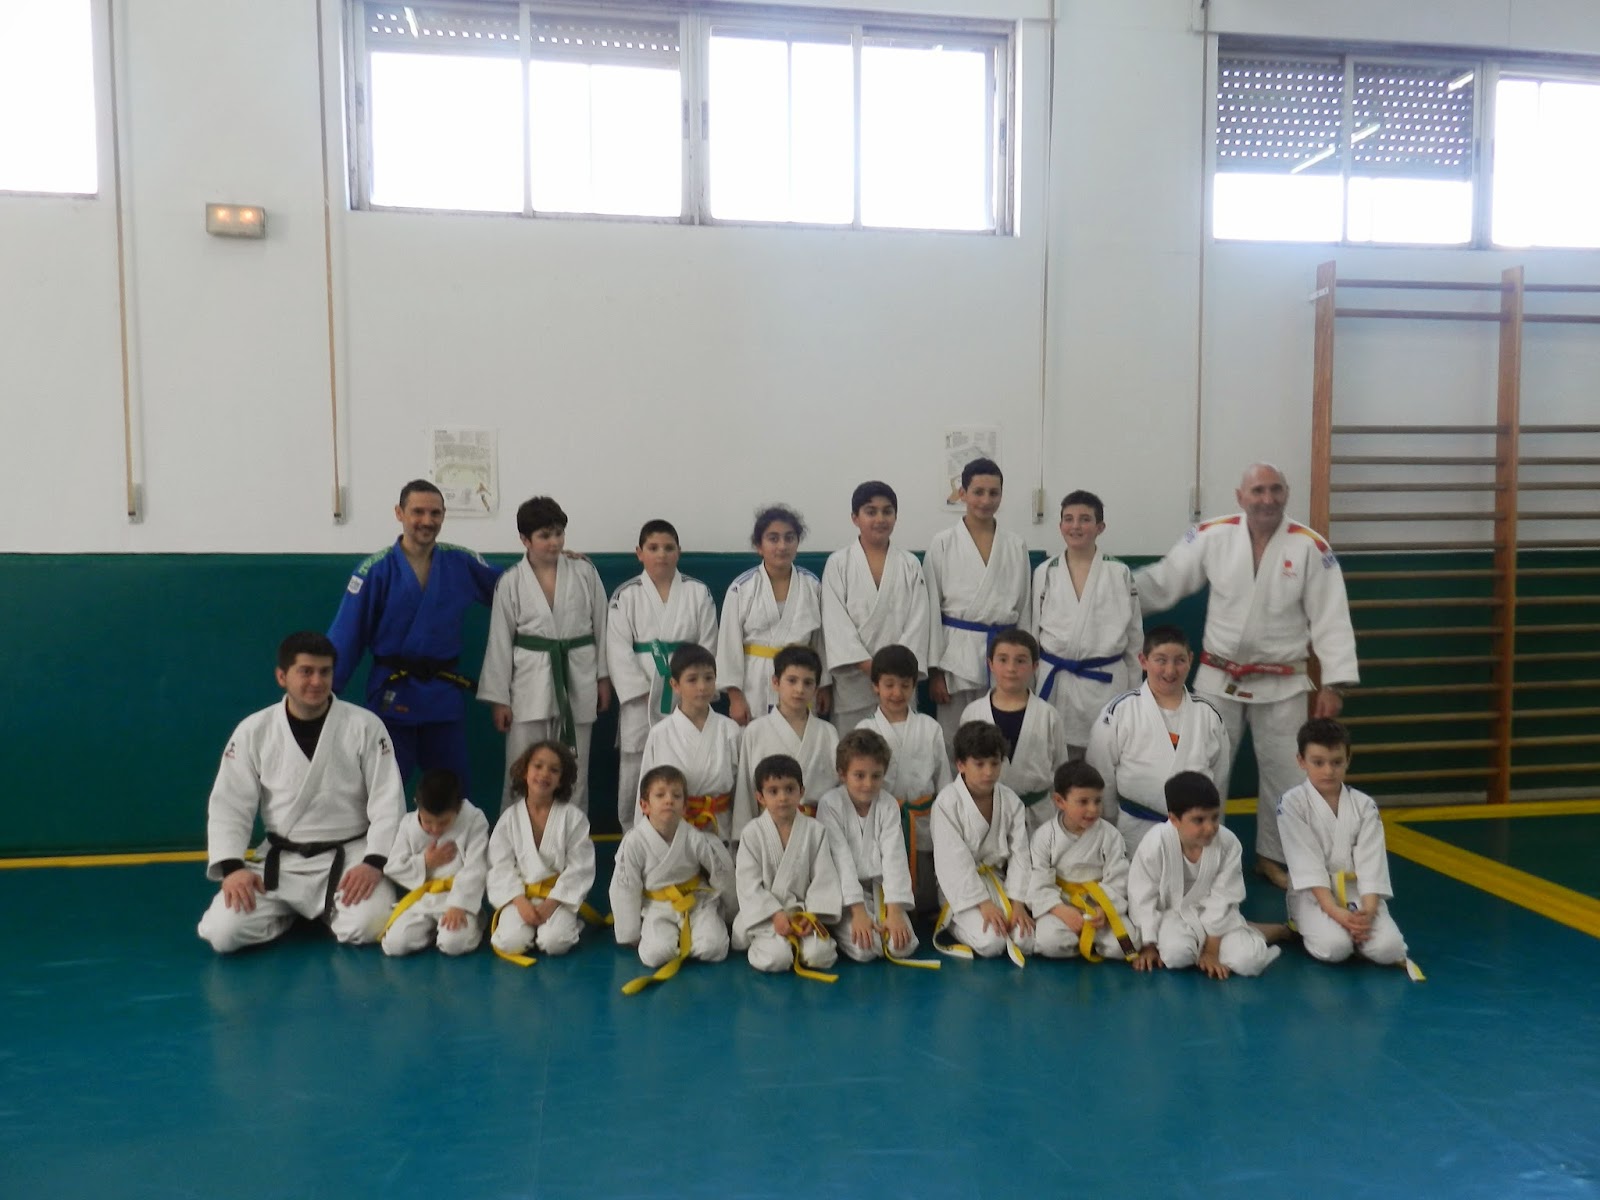 http://judotsukuri.wix.com/fotosjudotsukuri1#!entrenamiento-010315/c165x